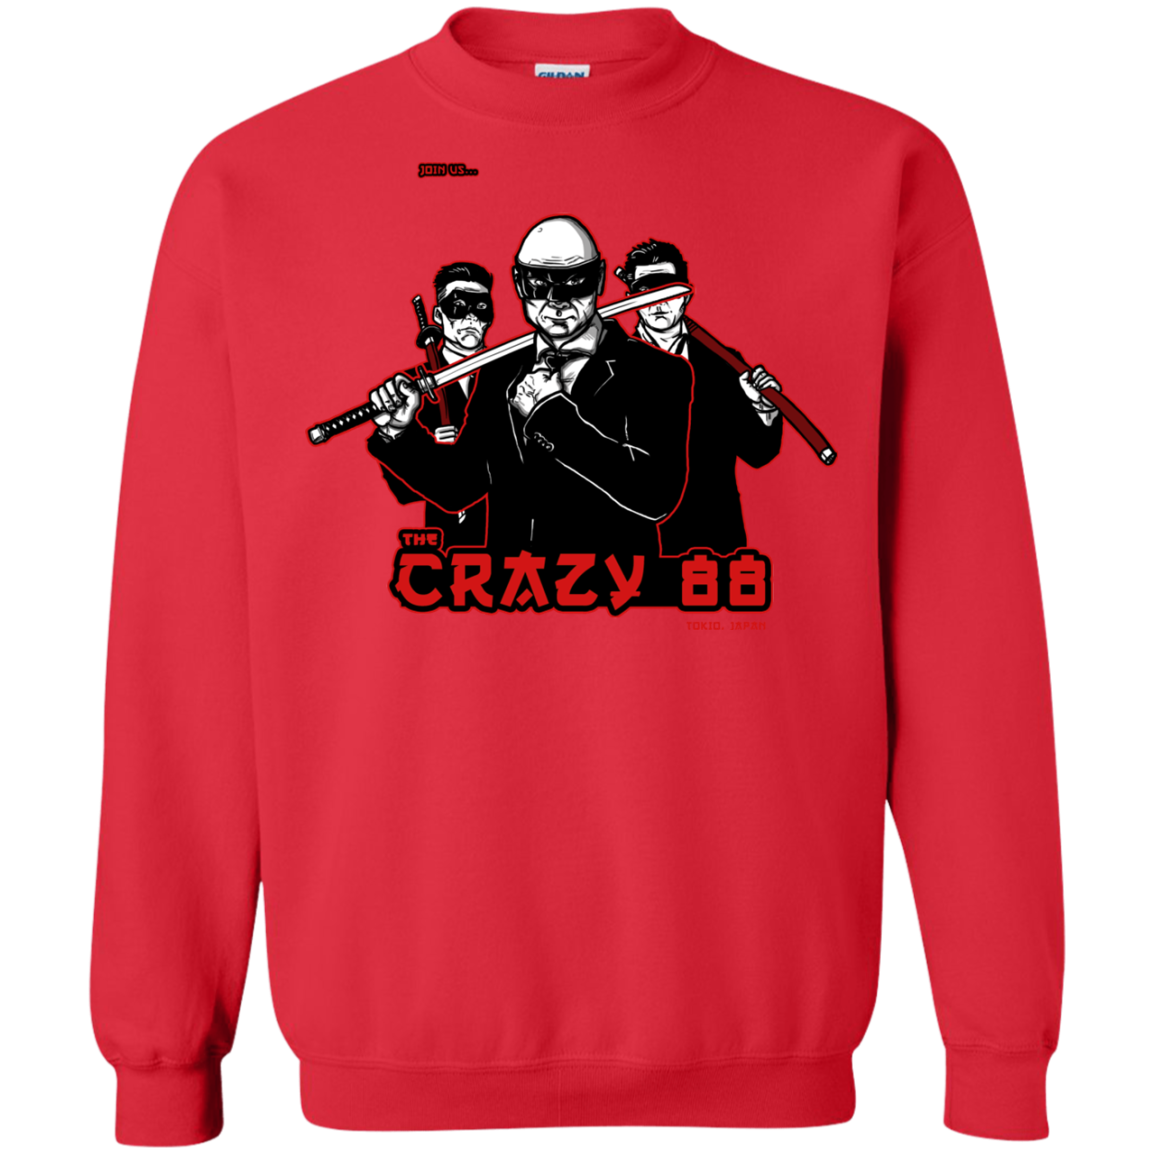 Join The Gang Crewneck Sweatshirt